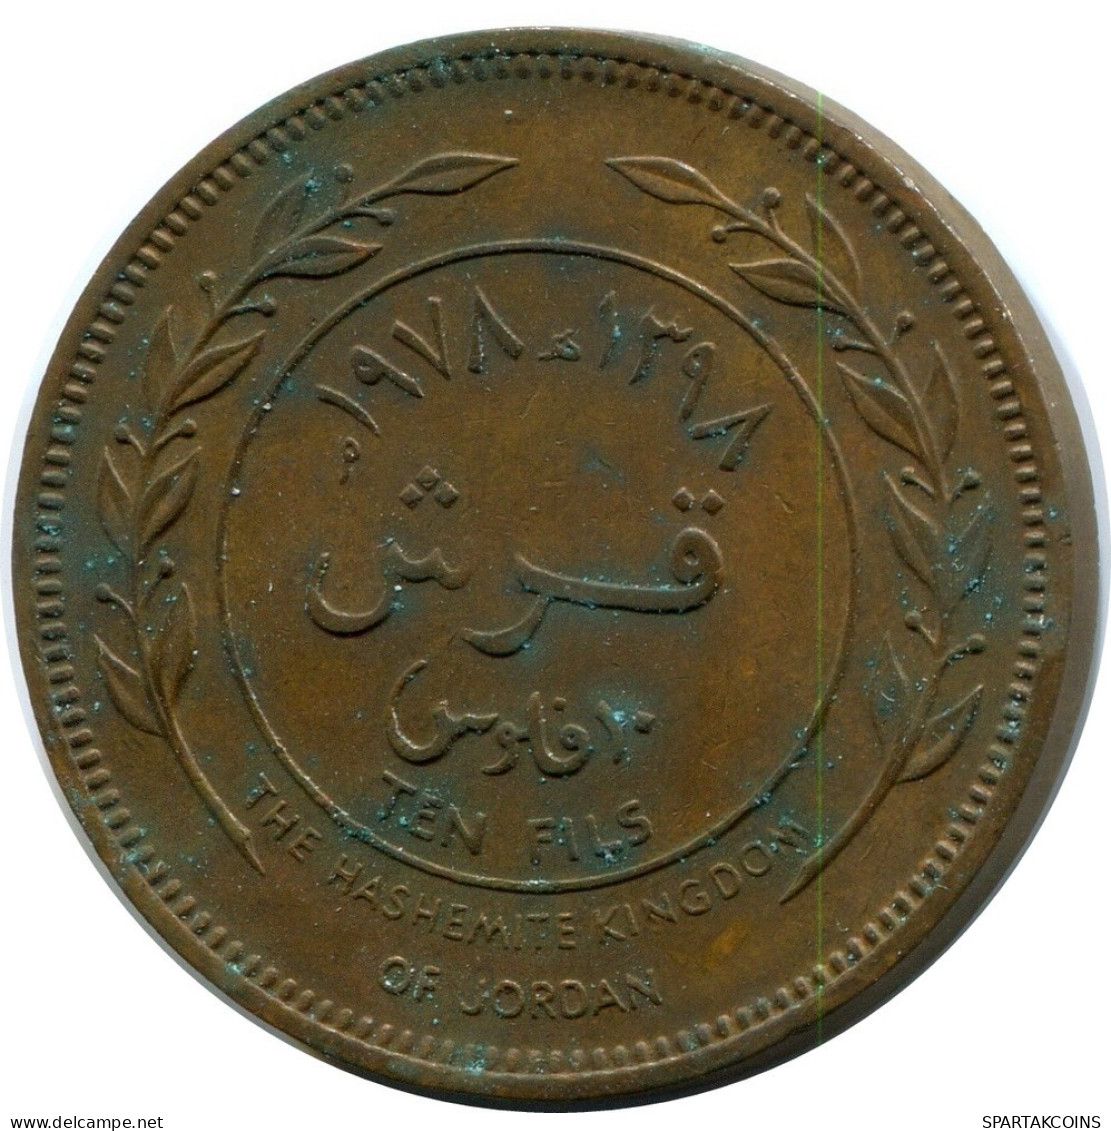 1 QIRSH 10 FILS 1398-1978 JORDANIA JORDAN Islámico Moneda #AW795.E.A - Jordania